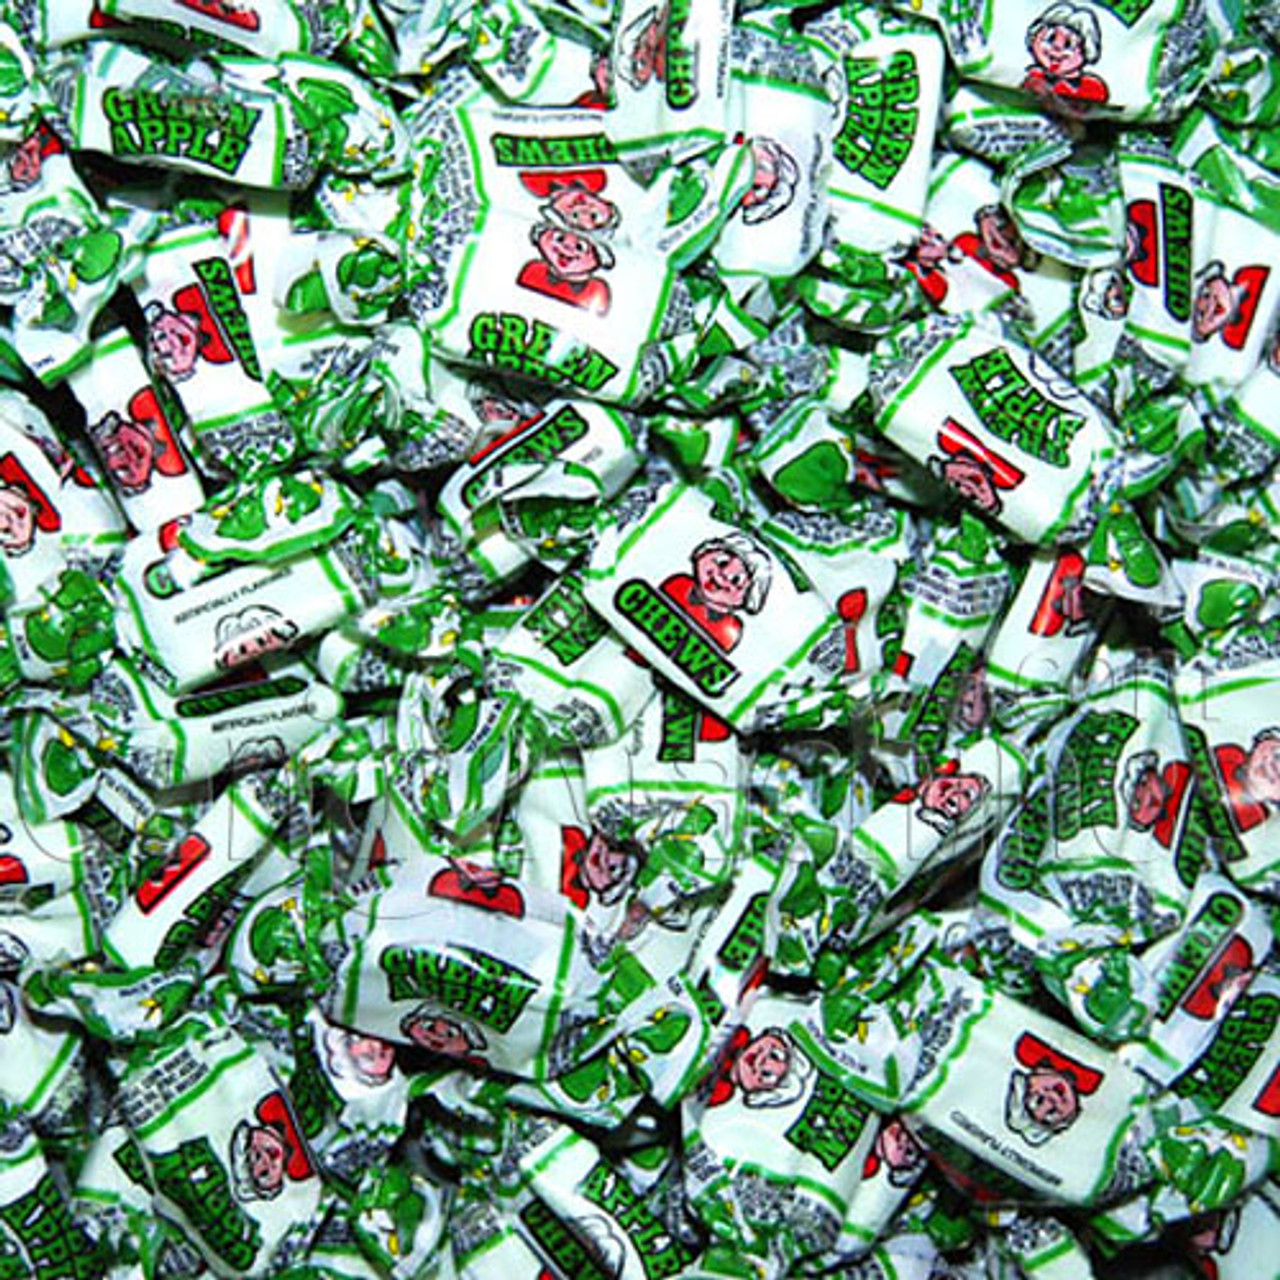 Candy Pros Green Apple Gummy Bears